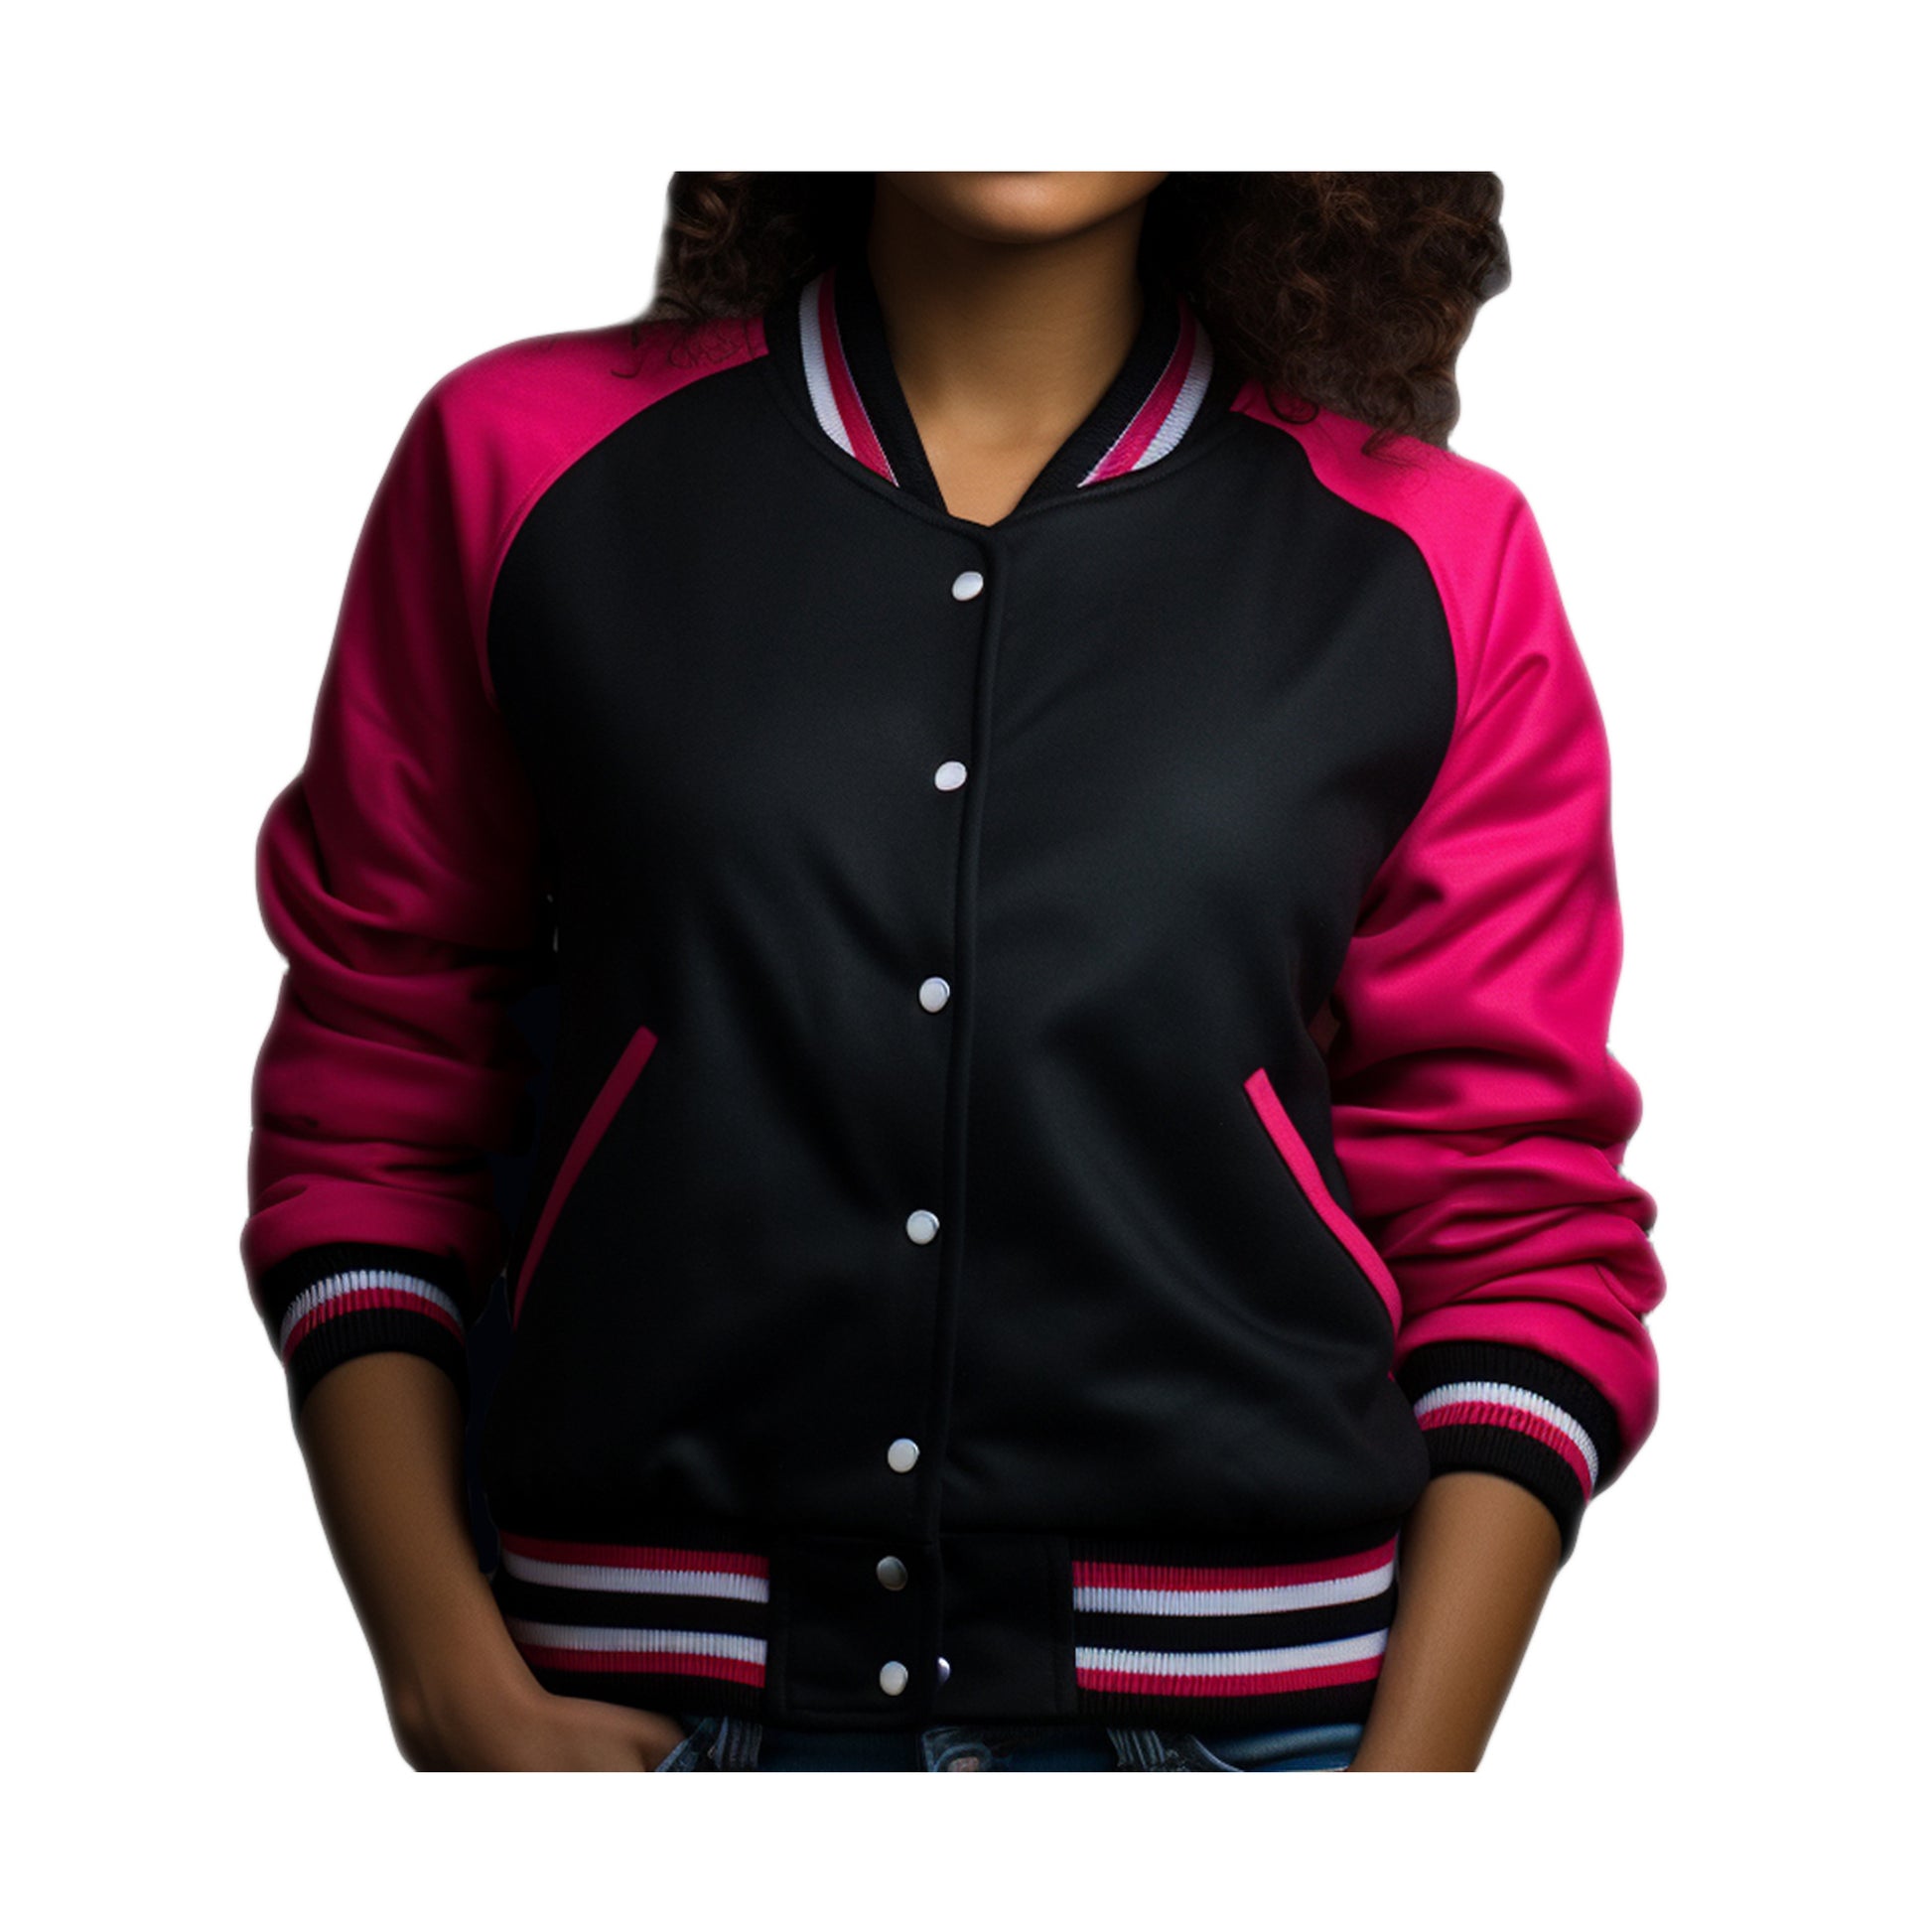 Hot Pink And Black Varsity Jacket